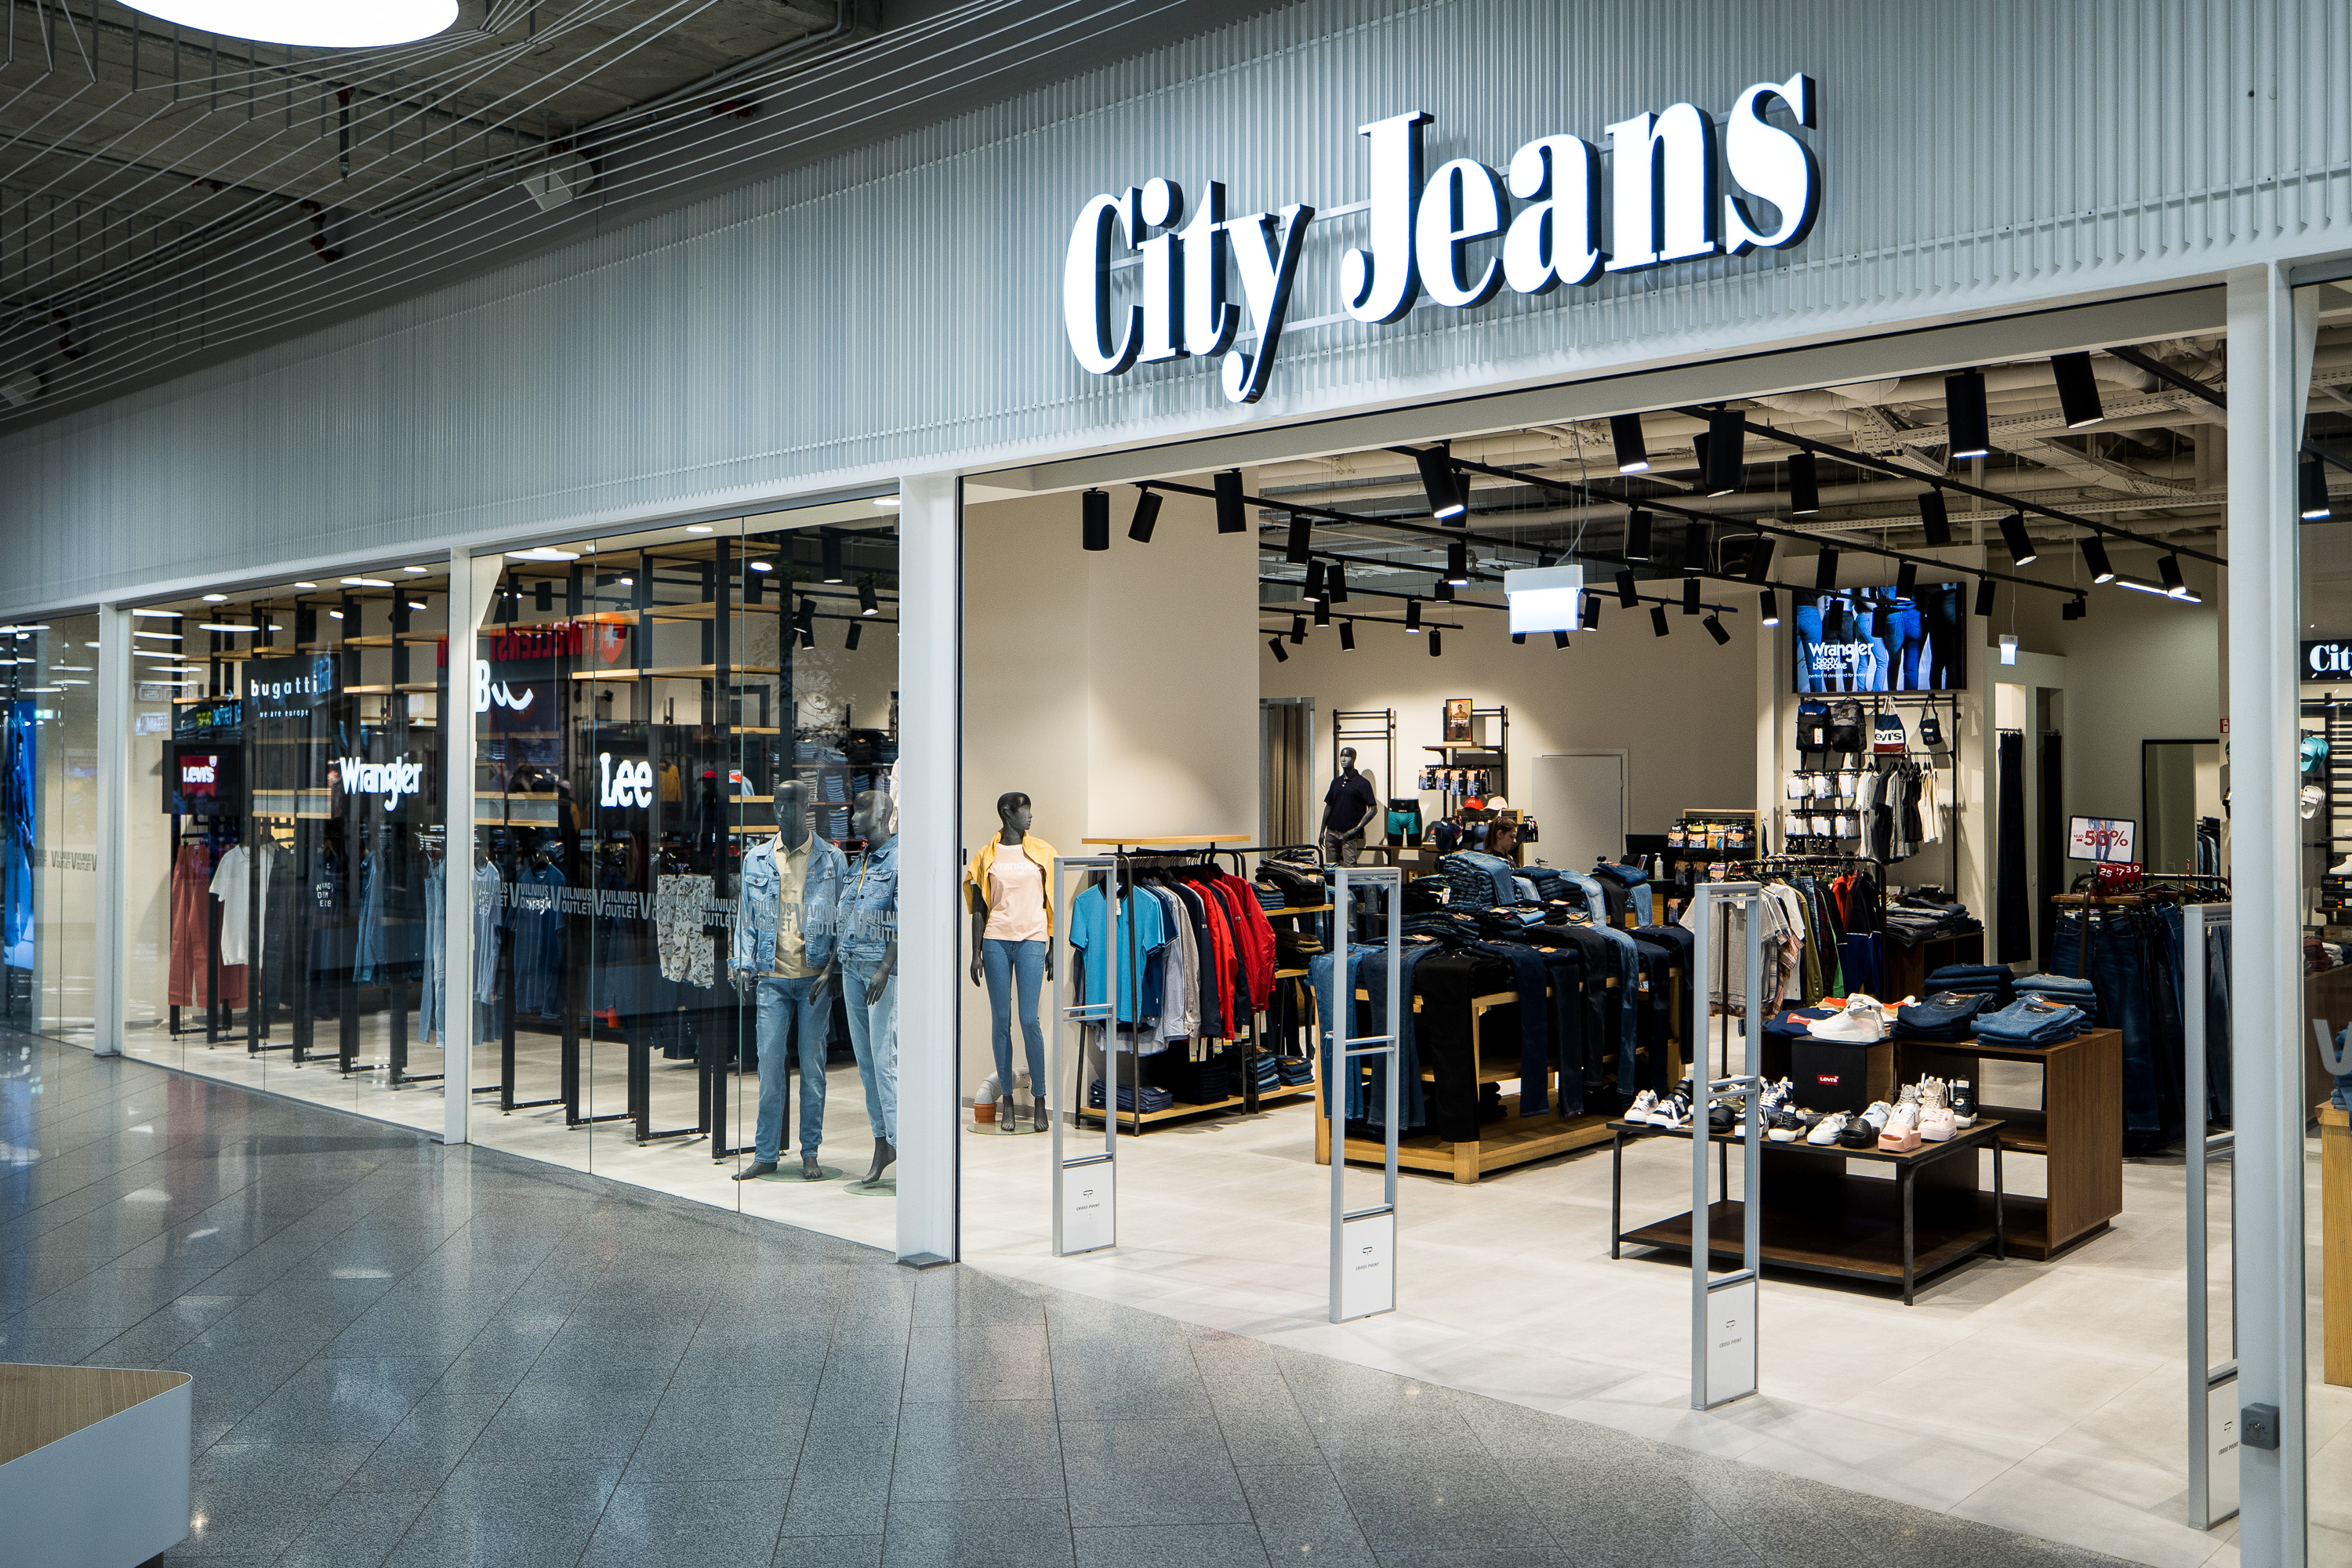 City Jeans